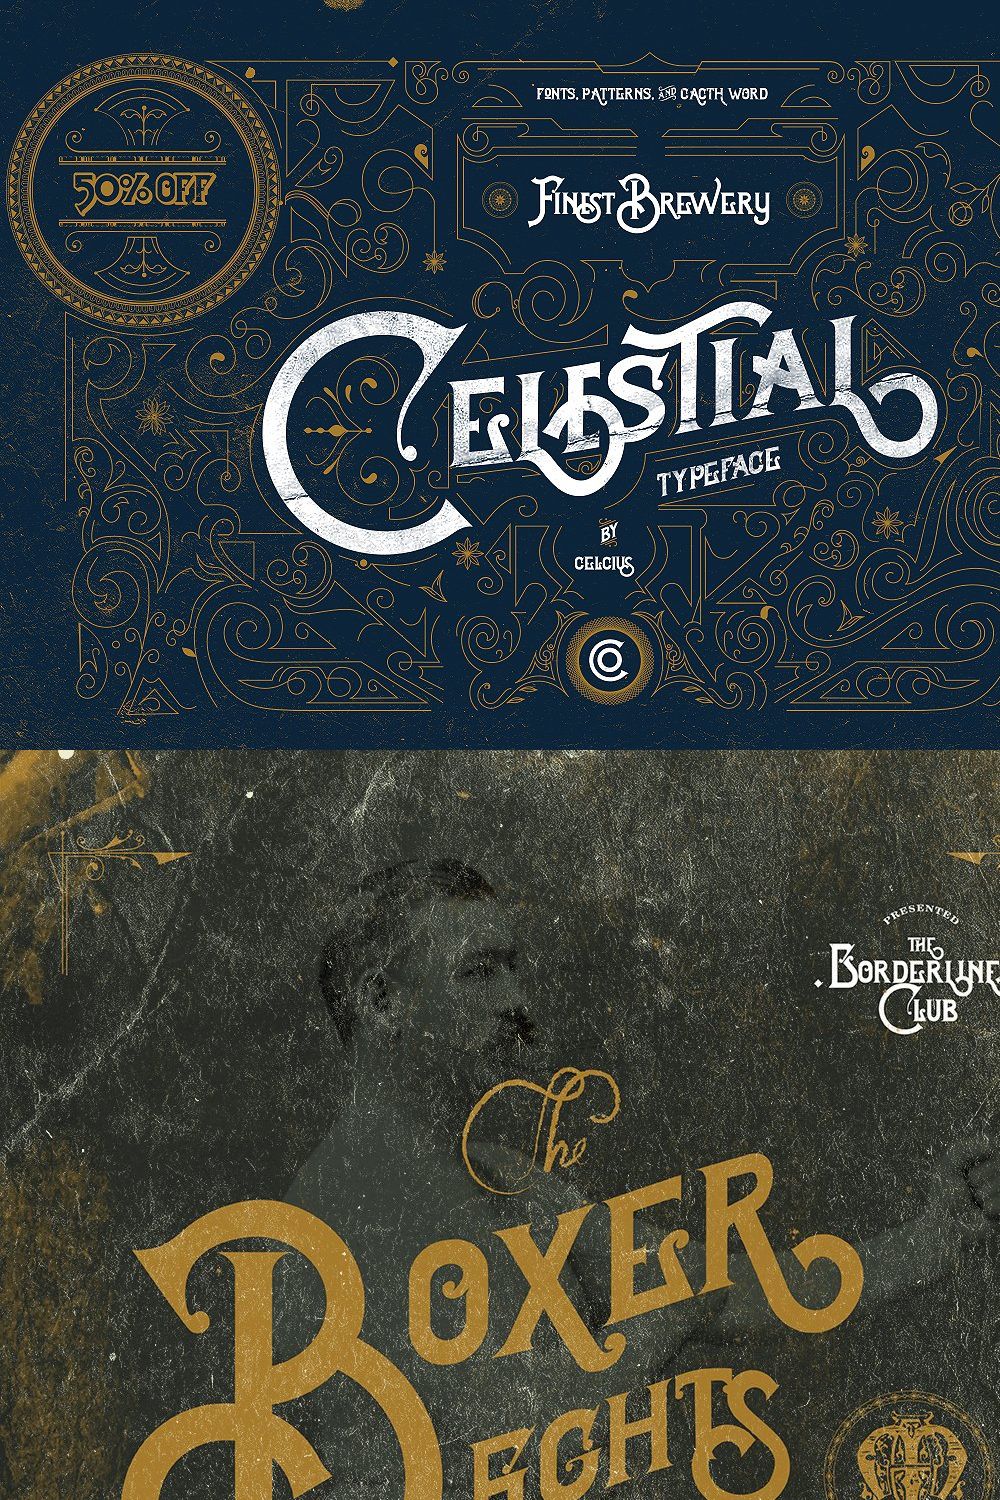 Celestial Fonts & Vintage Pattern pinterest preview image.